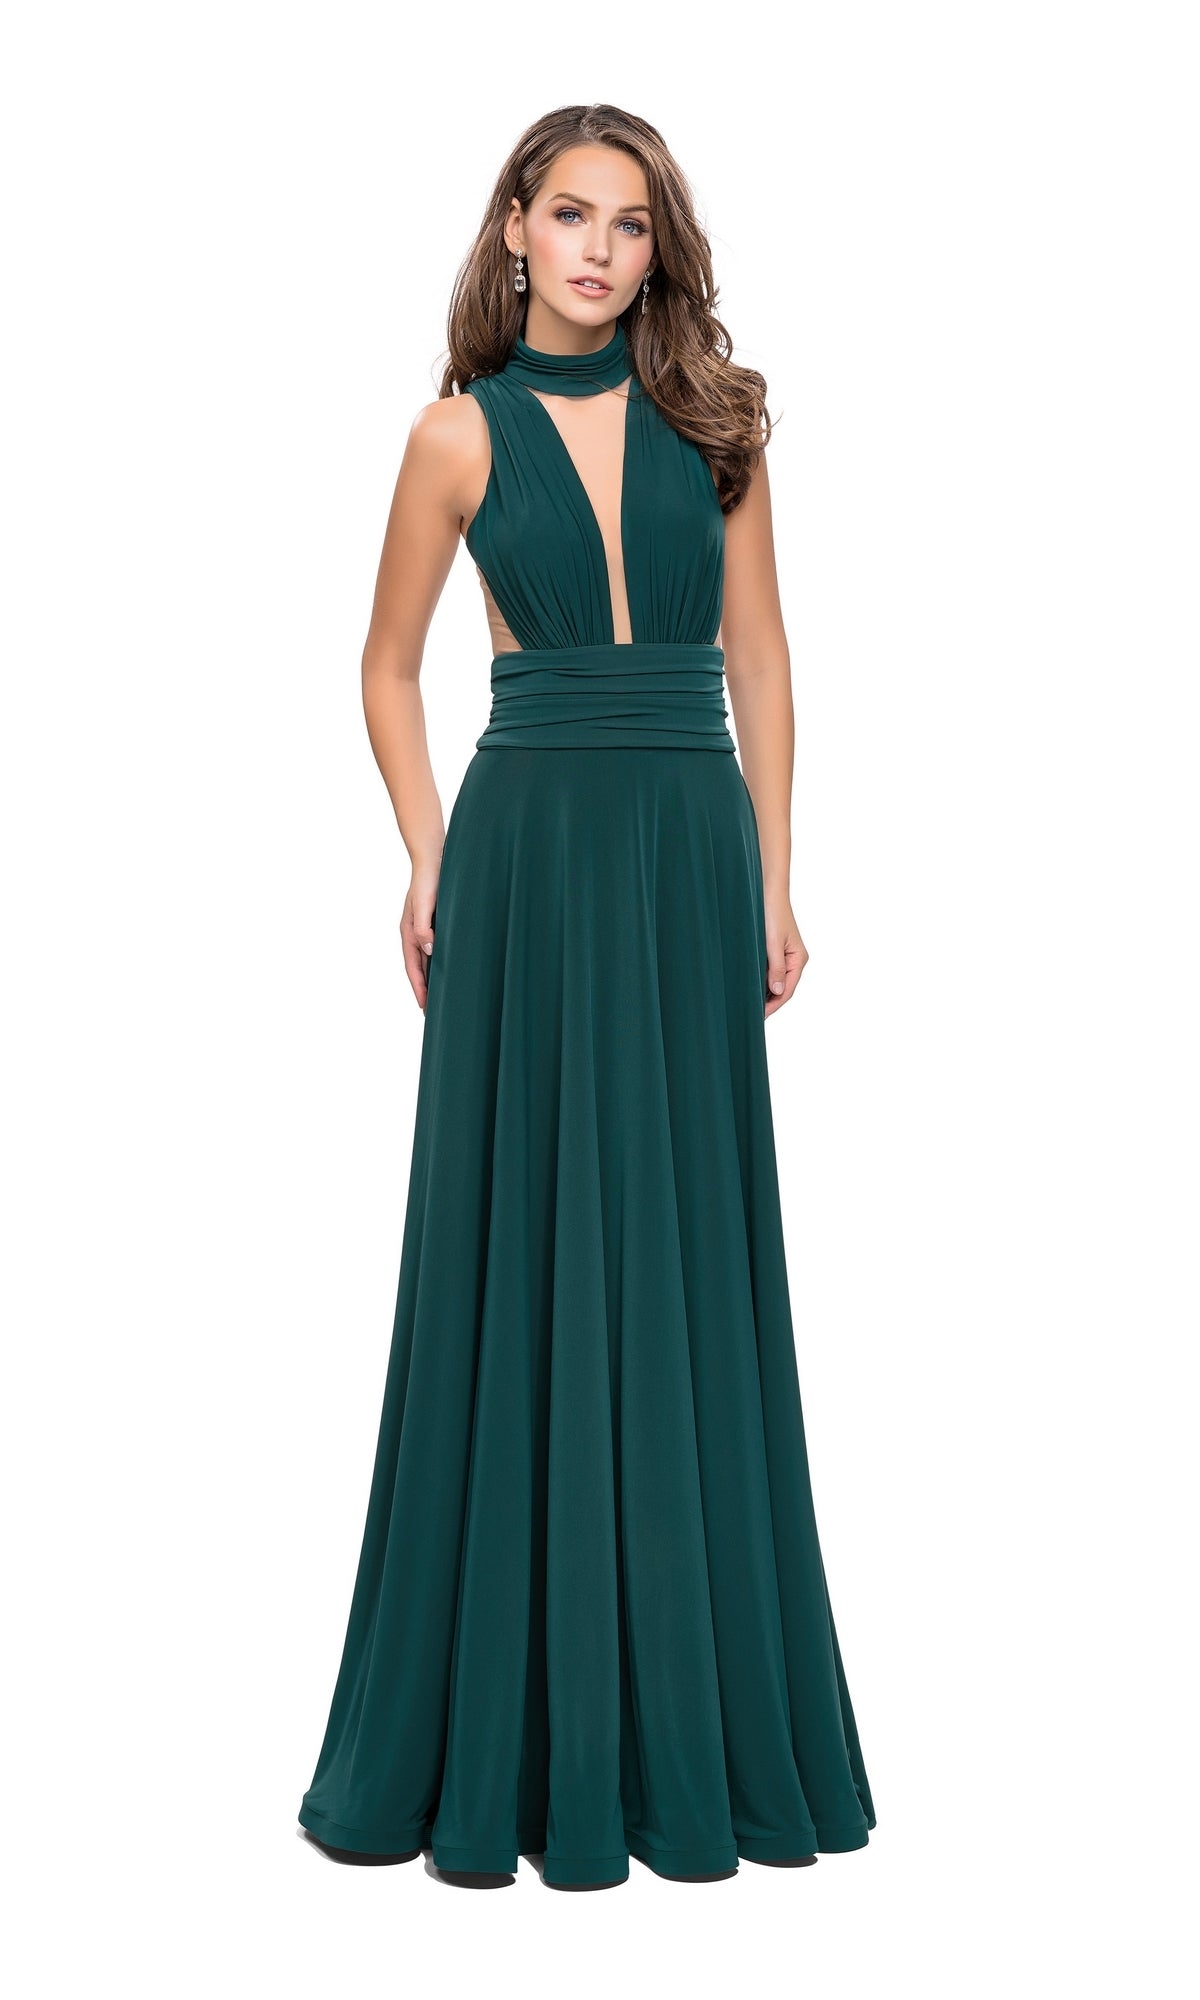 La Femme 25568 Long Prom Dress